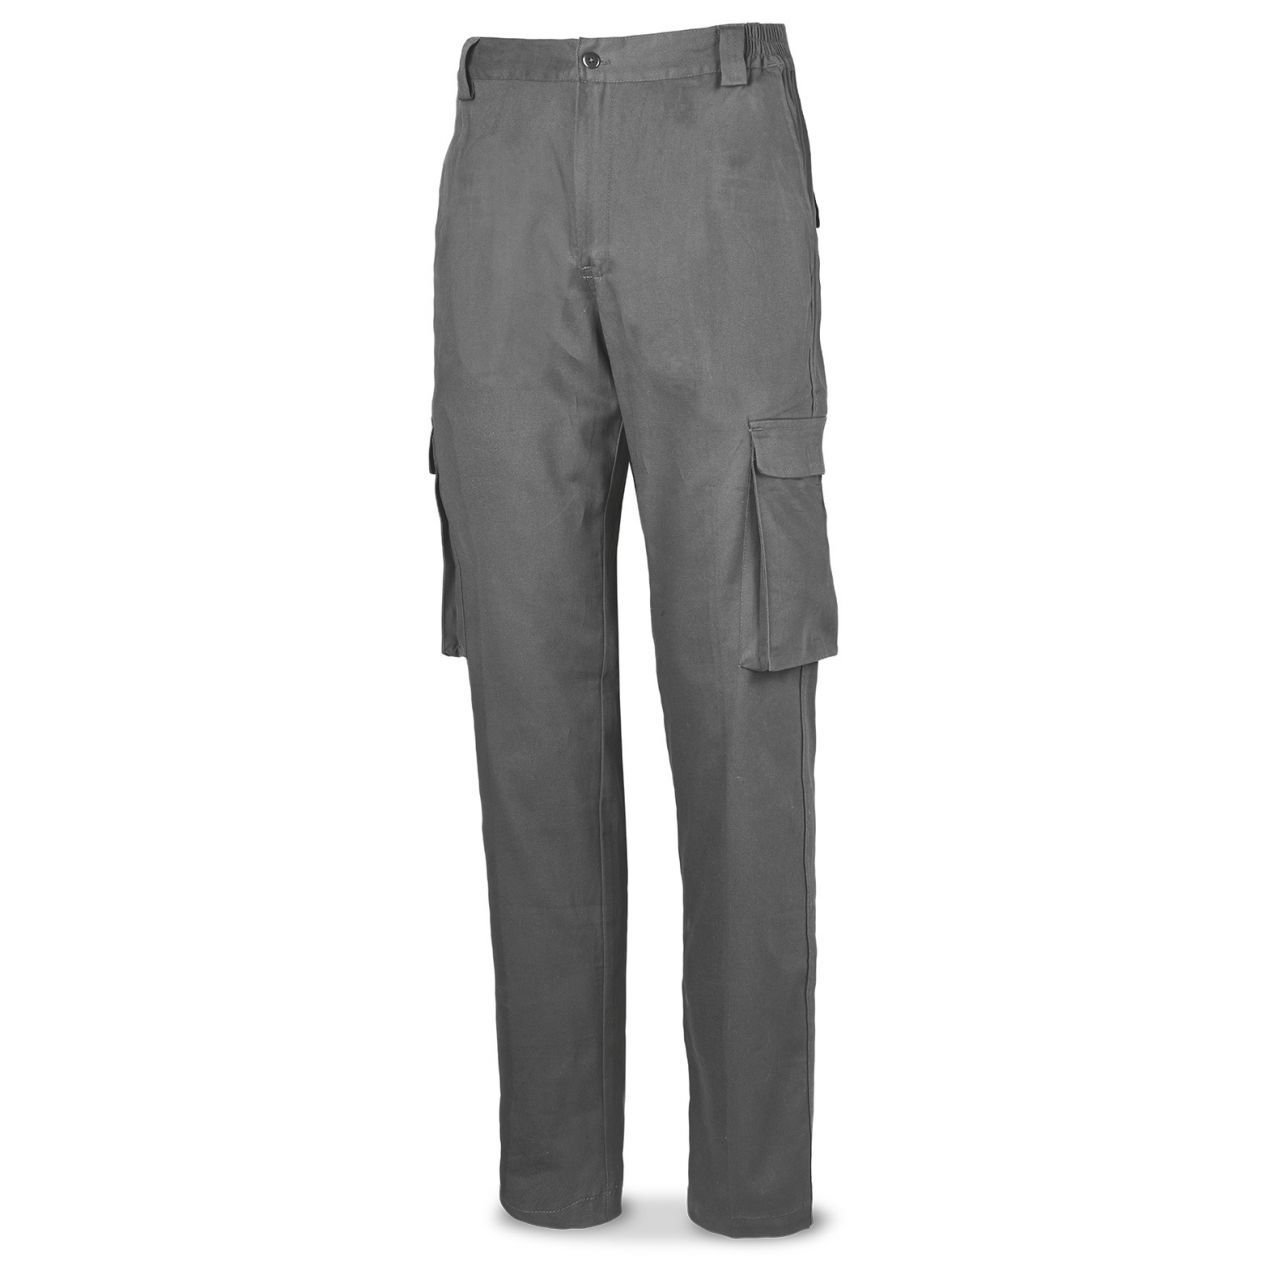 Pantalón STRETCH básico. Color gris 58